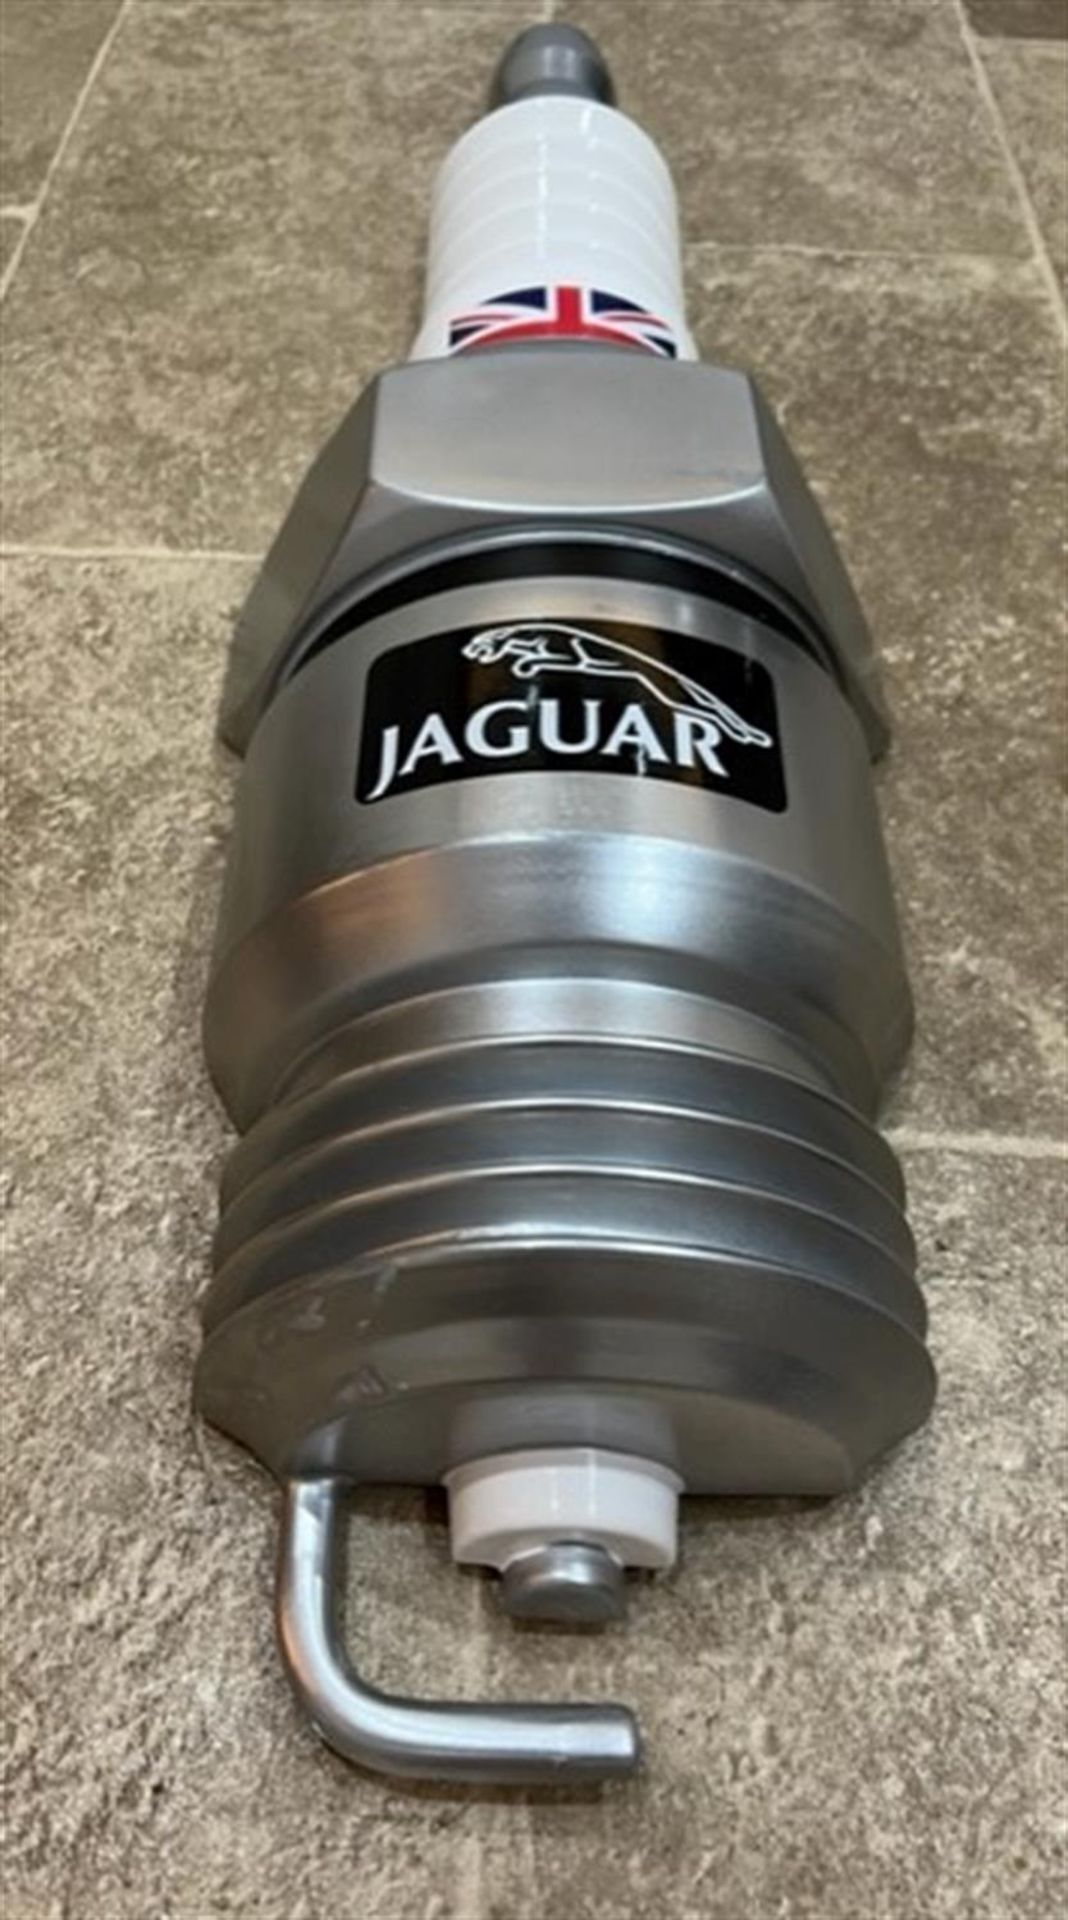 An Oversized Jaguar-Themed 'Spark Plug' - 3D Fibreglass Wall Art - Image 4 of 4